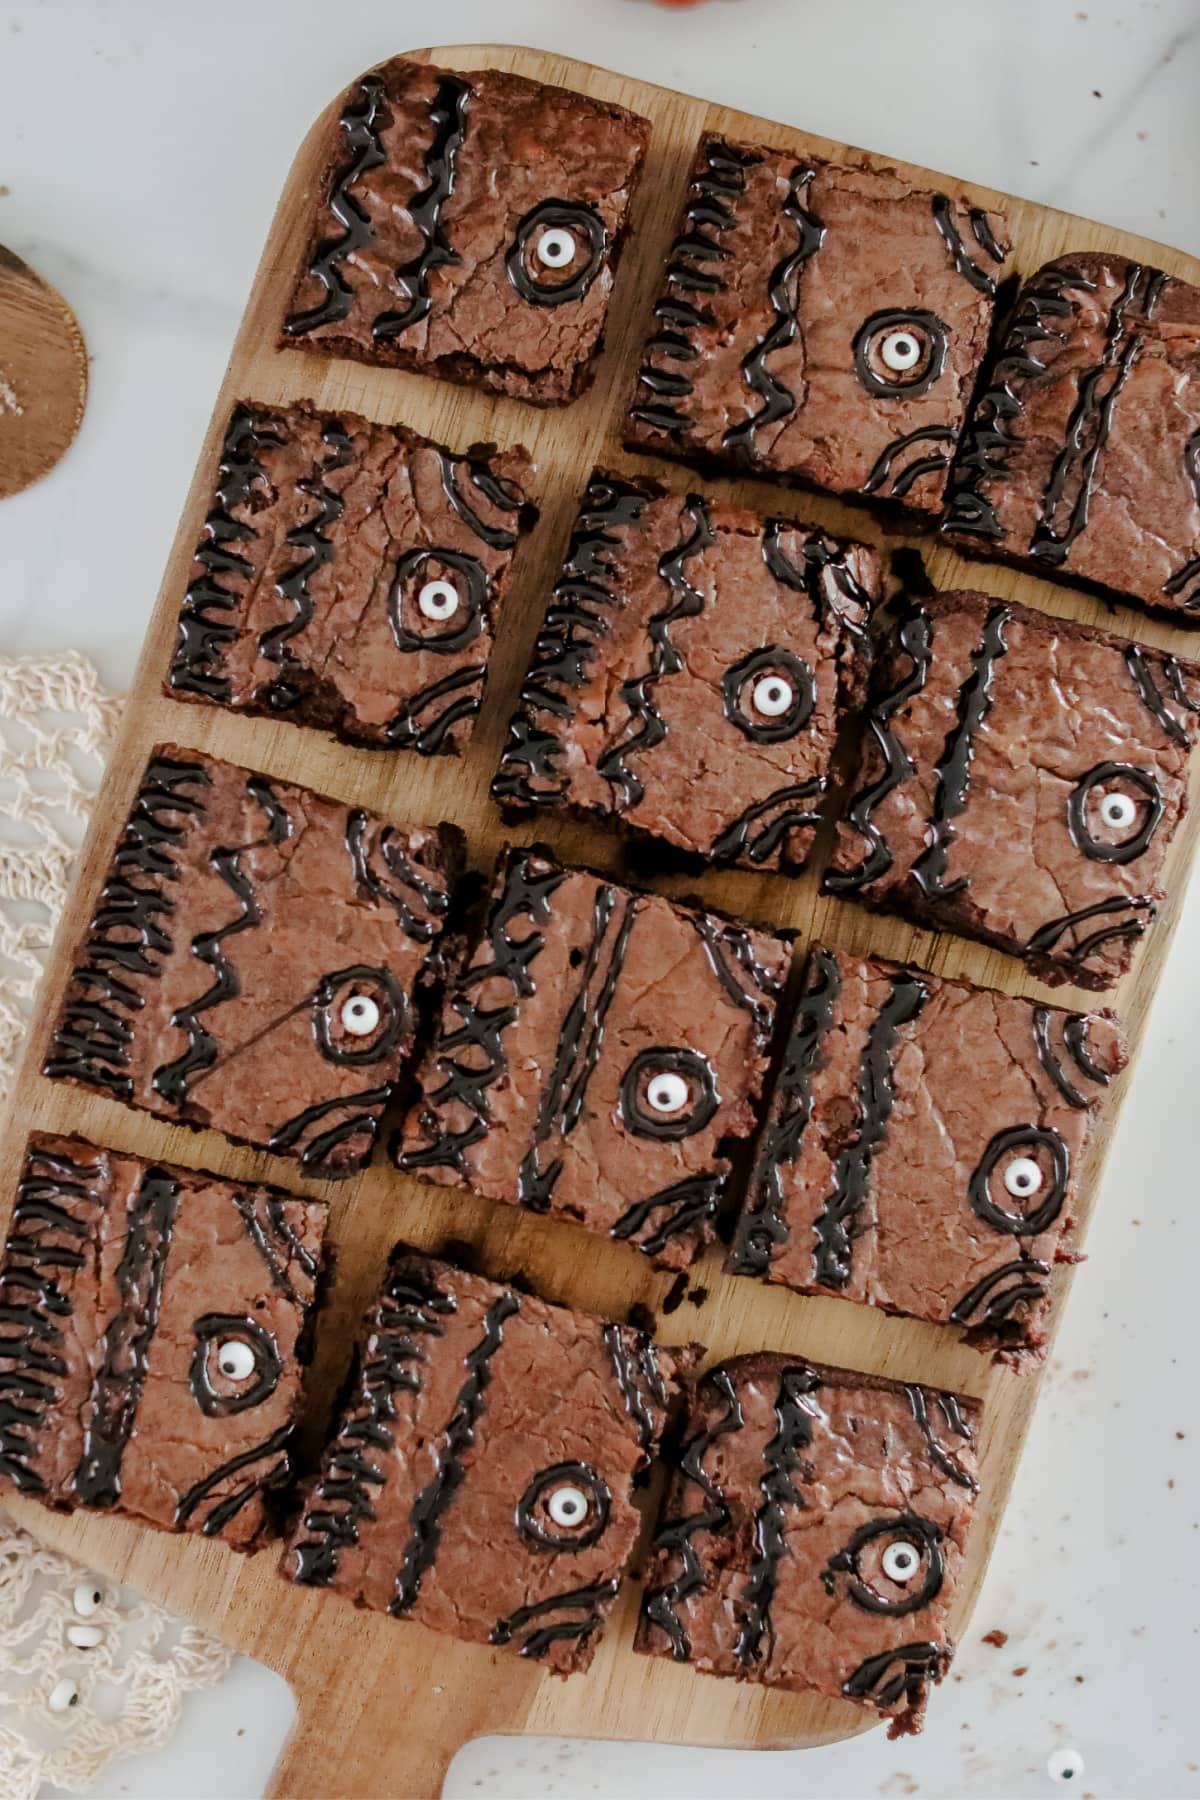 Harry Potter Spellbook Brownies on wooden board